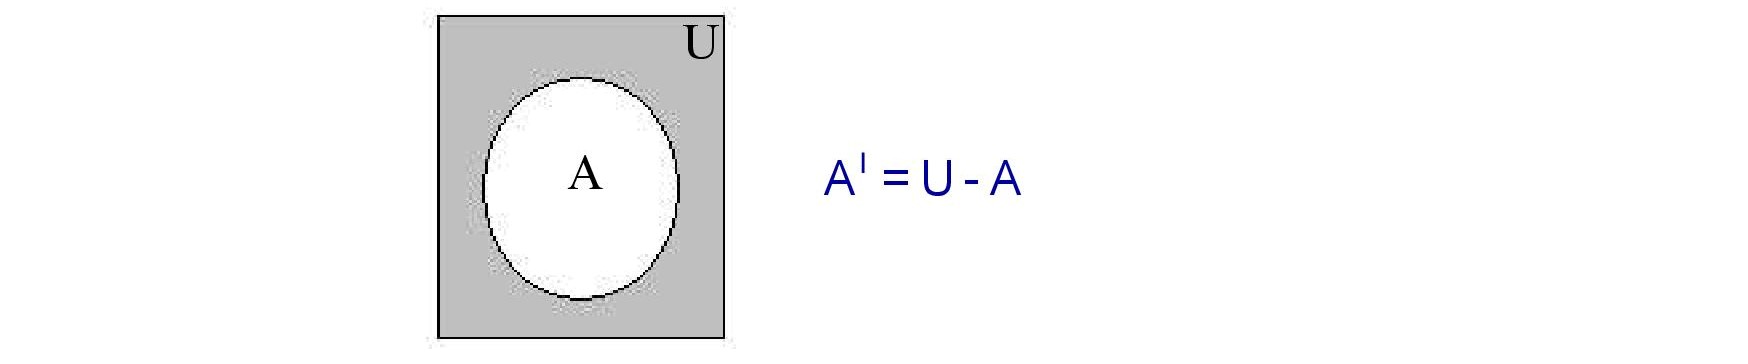 Venn Diagram of Al